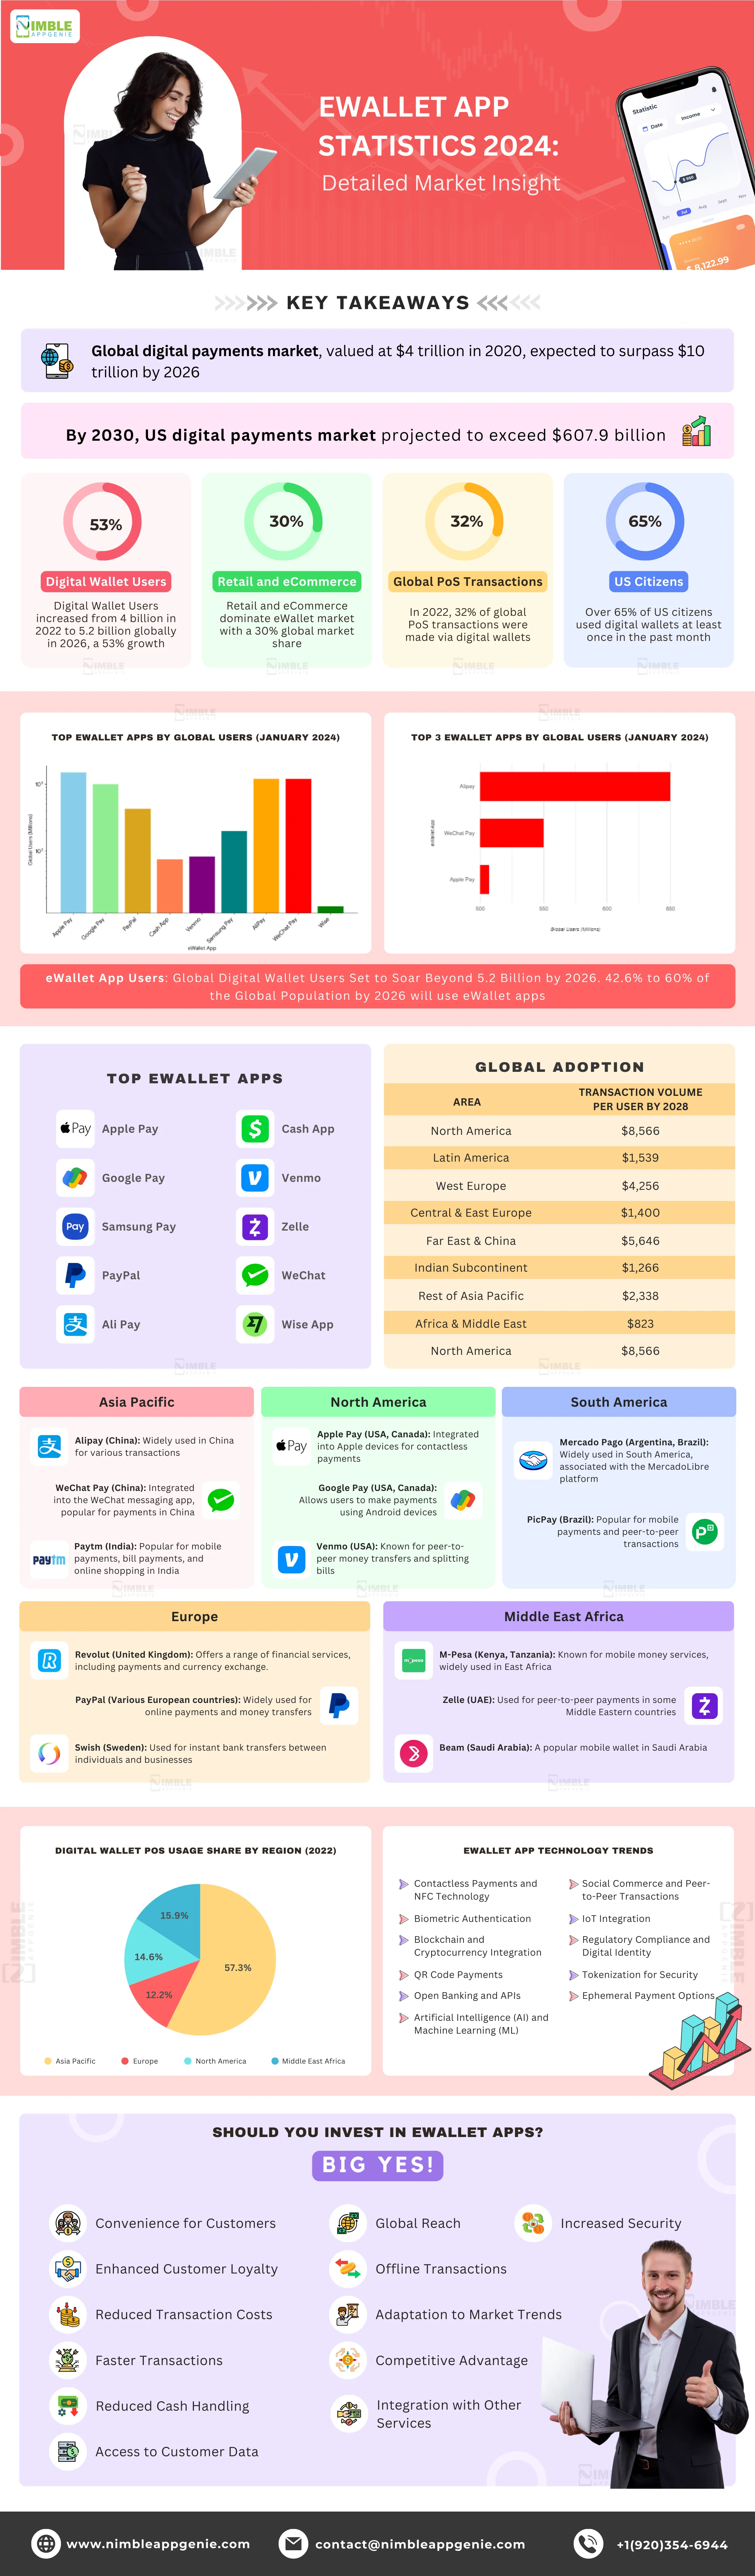 eWallet App Statistics: Infographic